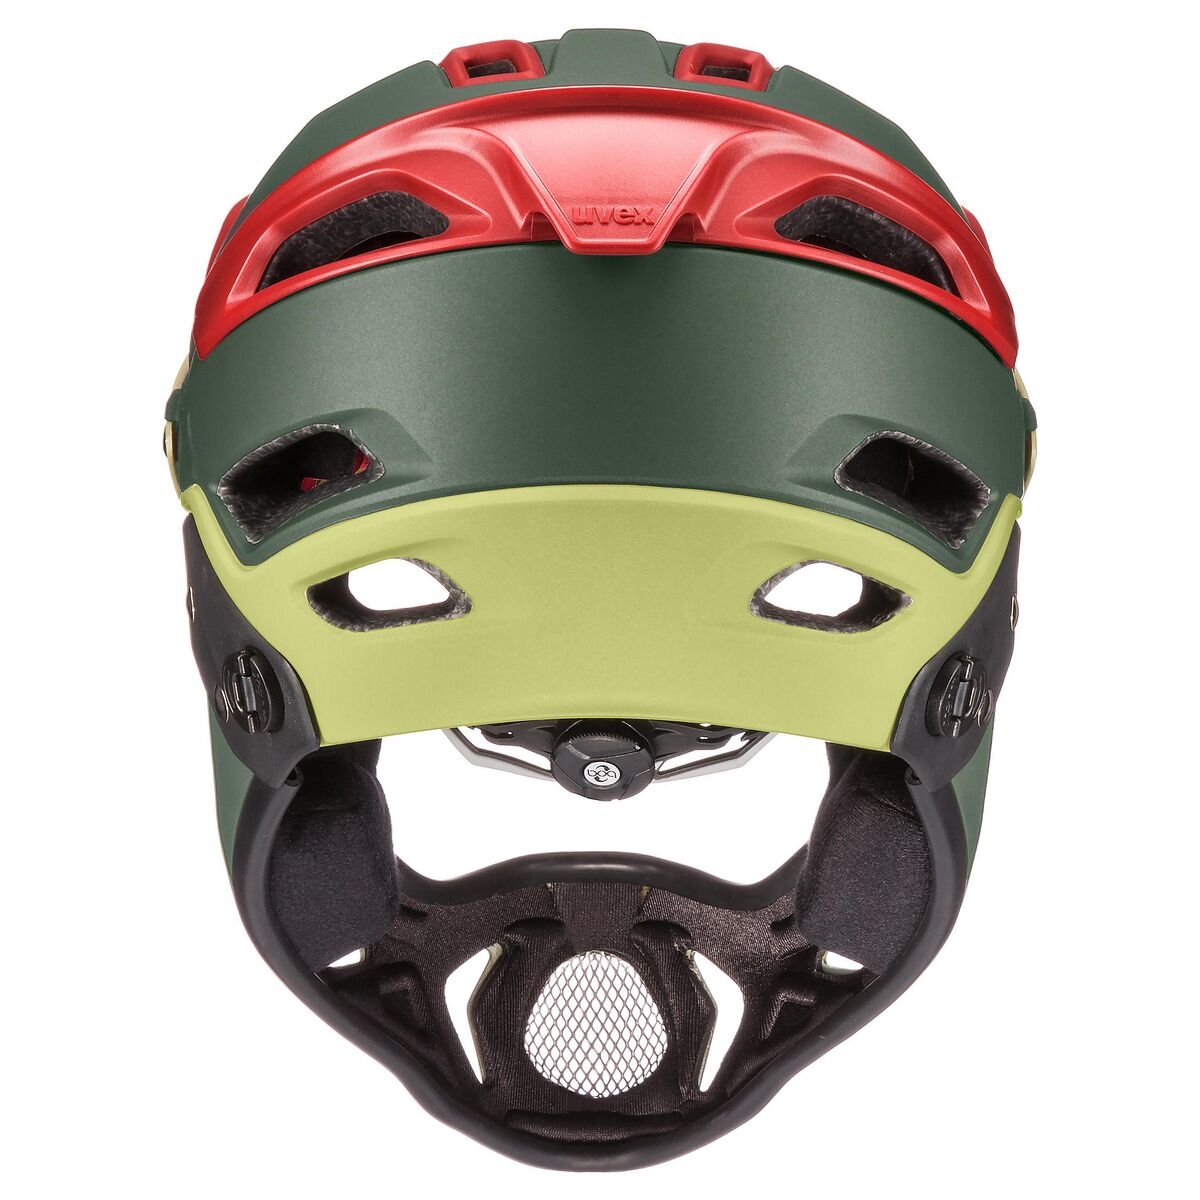 Uvex Jakkyl Hde MTB Fahrrad Helm grün/rot 2019 von Top